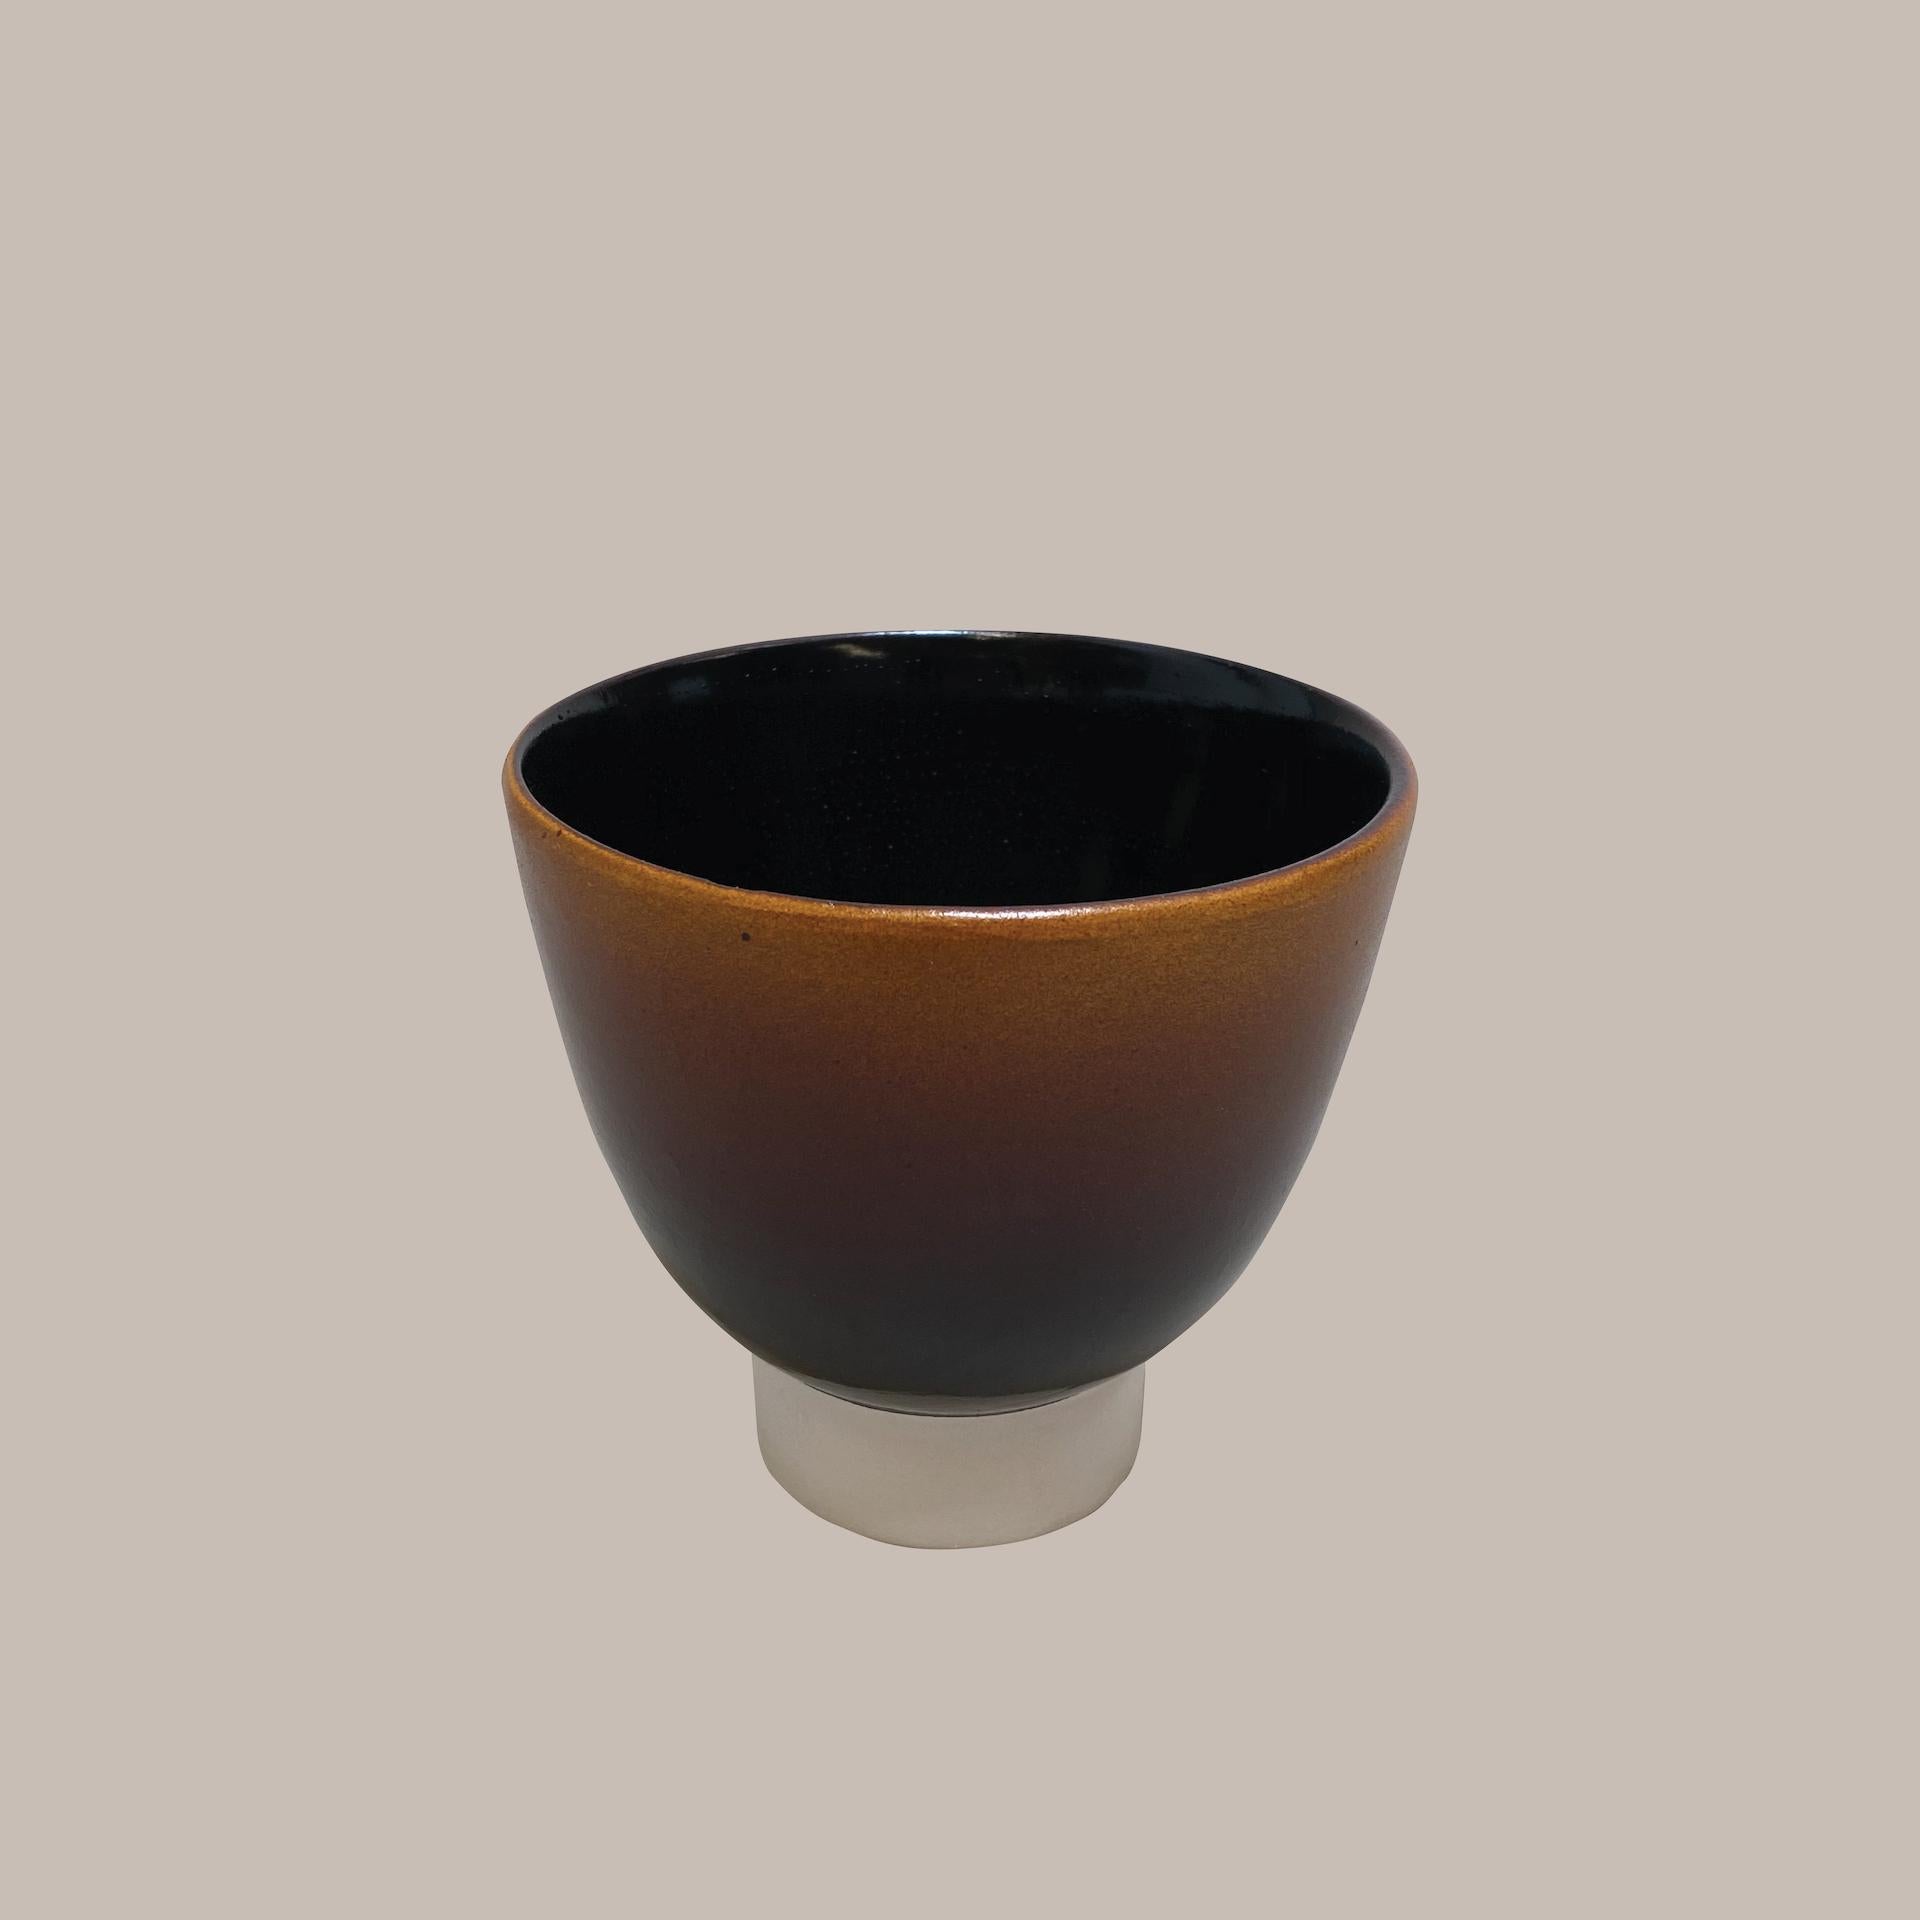 Modern Ott Another Paradigmatic Handmade Ceramic Cup by Studio Yoon Seok-Hyeon